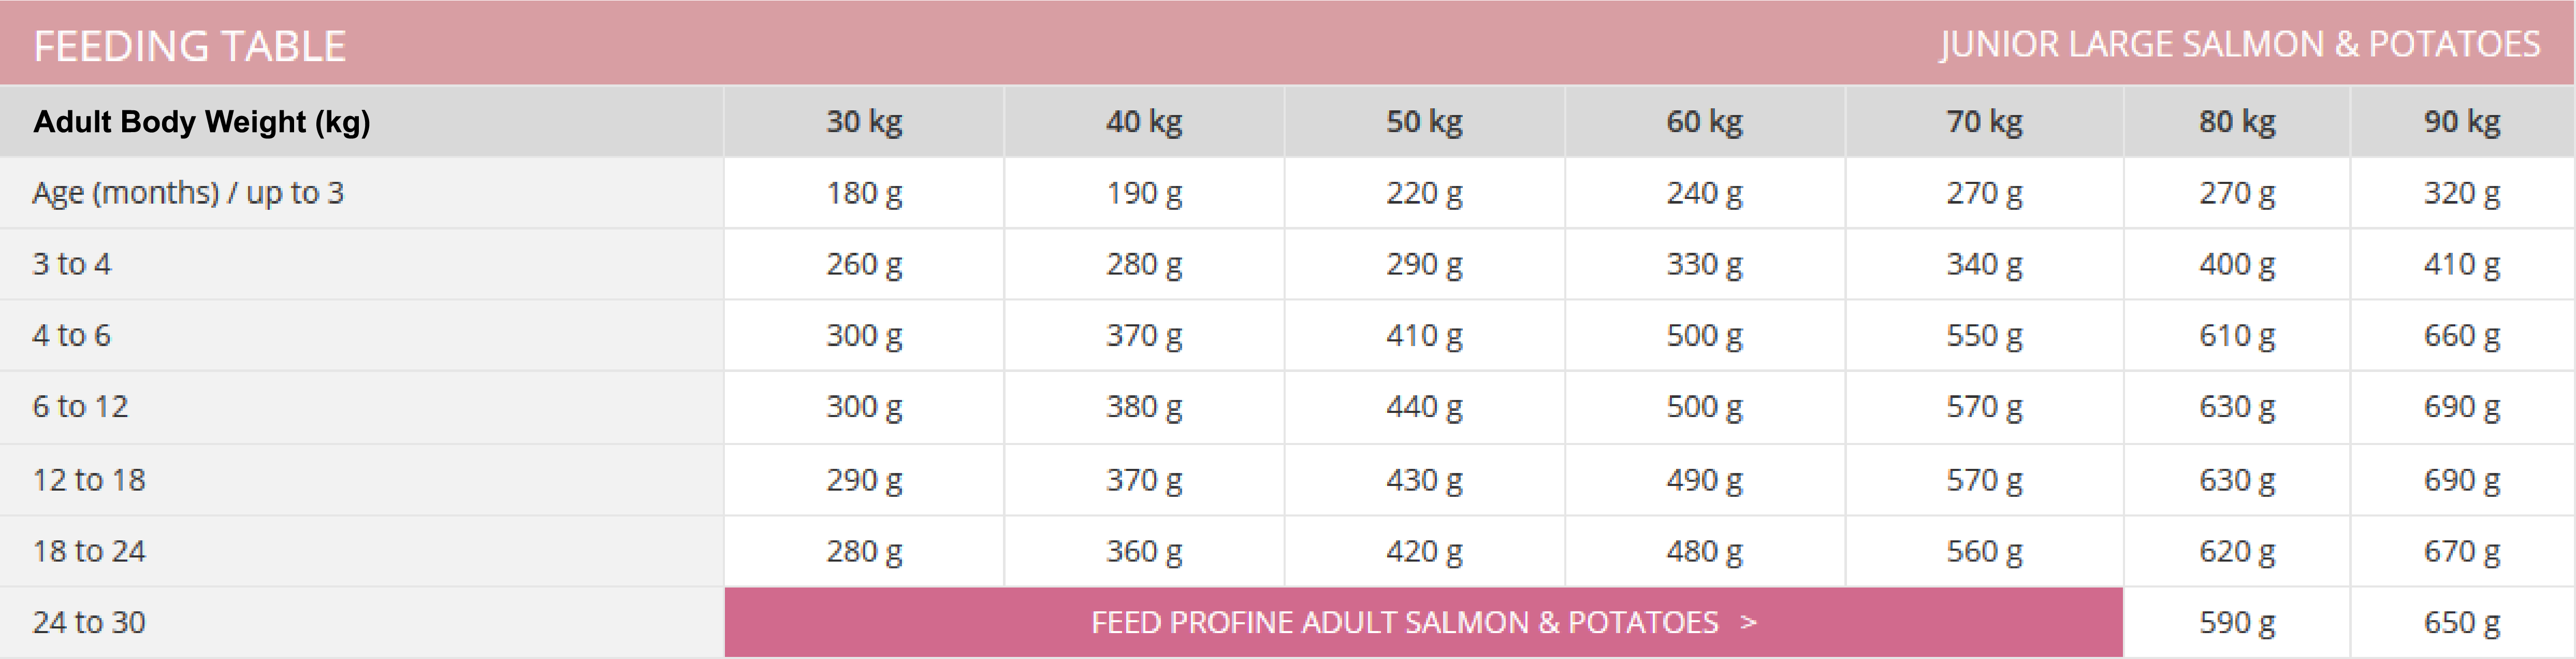 Profine Junior Large Breed Salmon & Potatoes Feeding Table